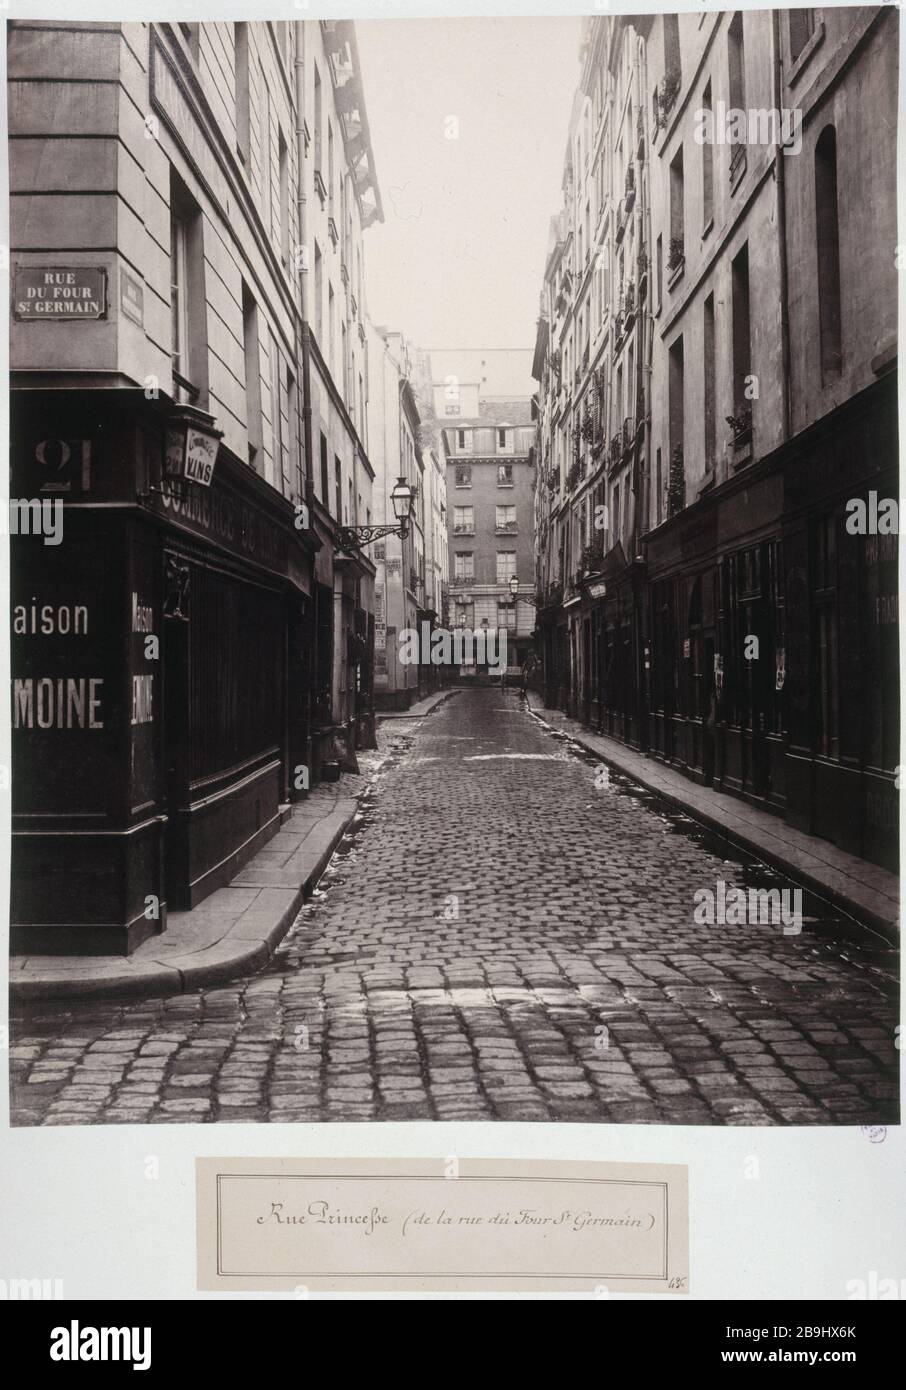 STRASSE PRINCESS (STRASSE SAINT-Germain OFEN) "Rue Princesse (de la rue du Four Saint-Germain)", VIème arr.. Photographie de Charles Marville (13-1879). Paris, musée Carnavalet. Stockfoto